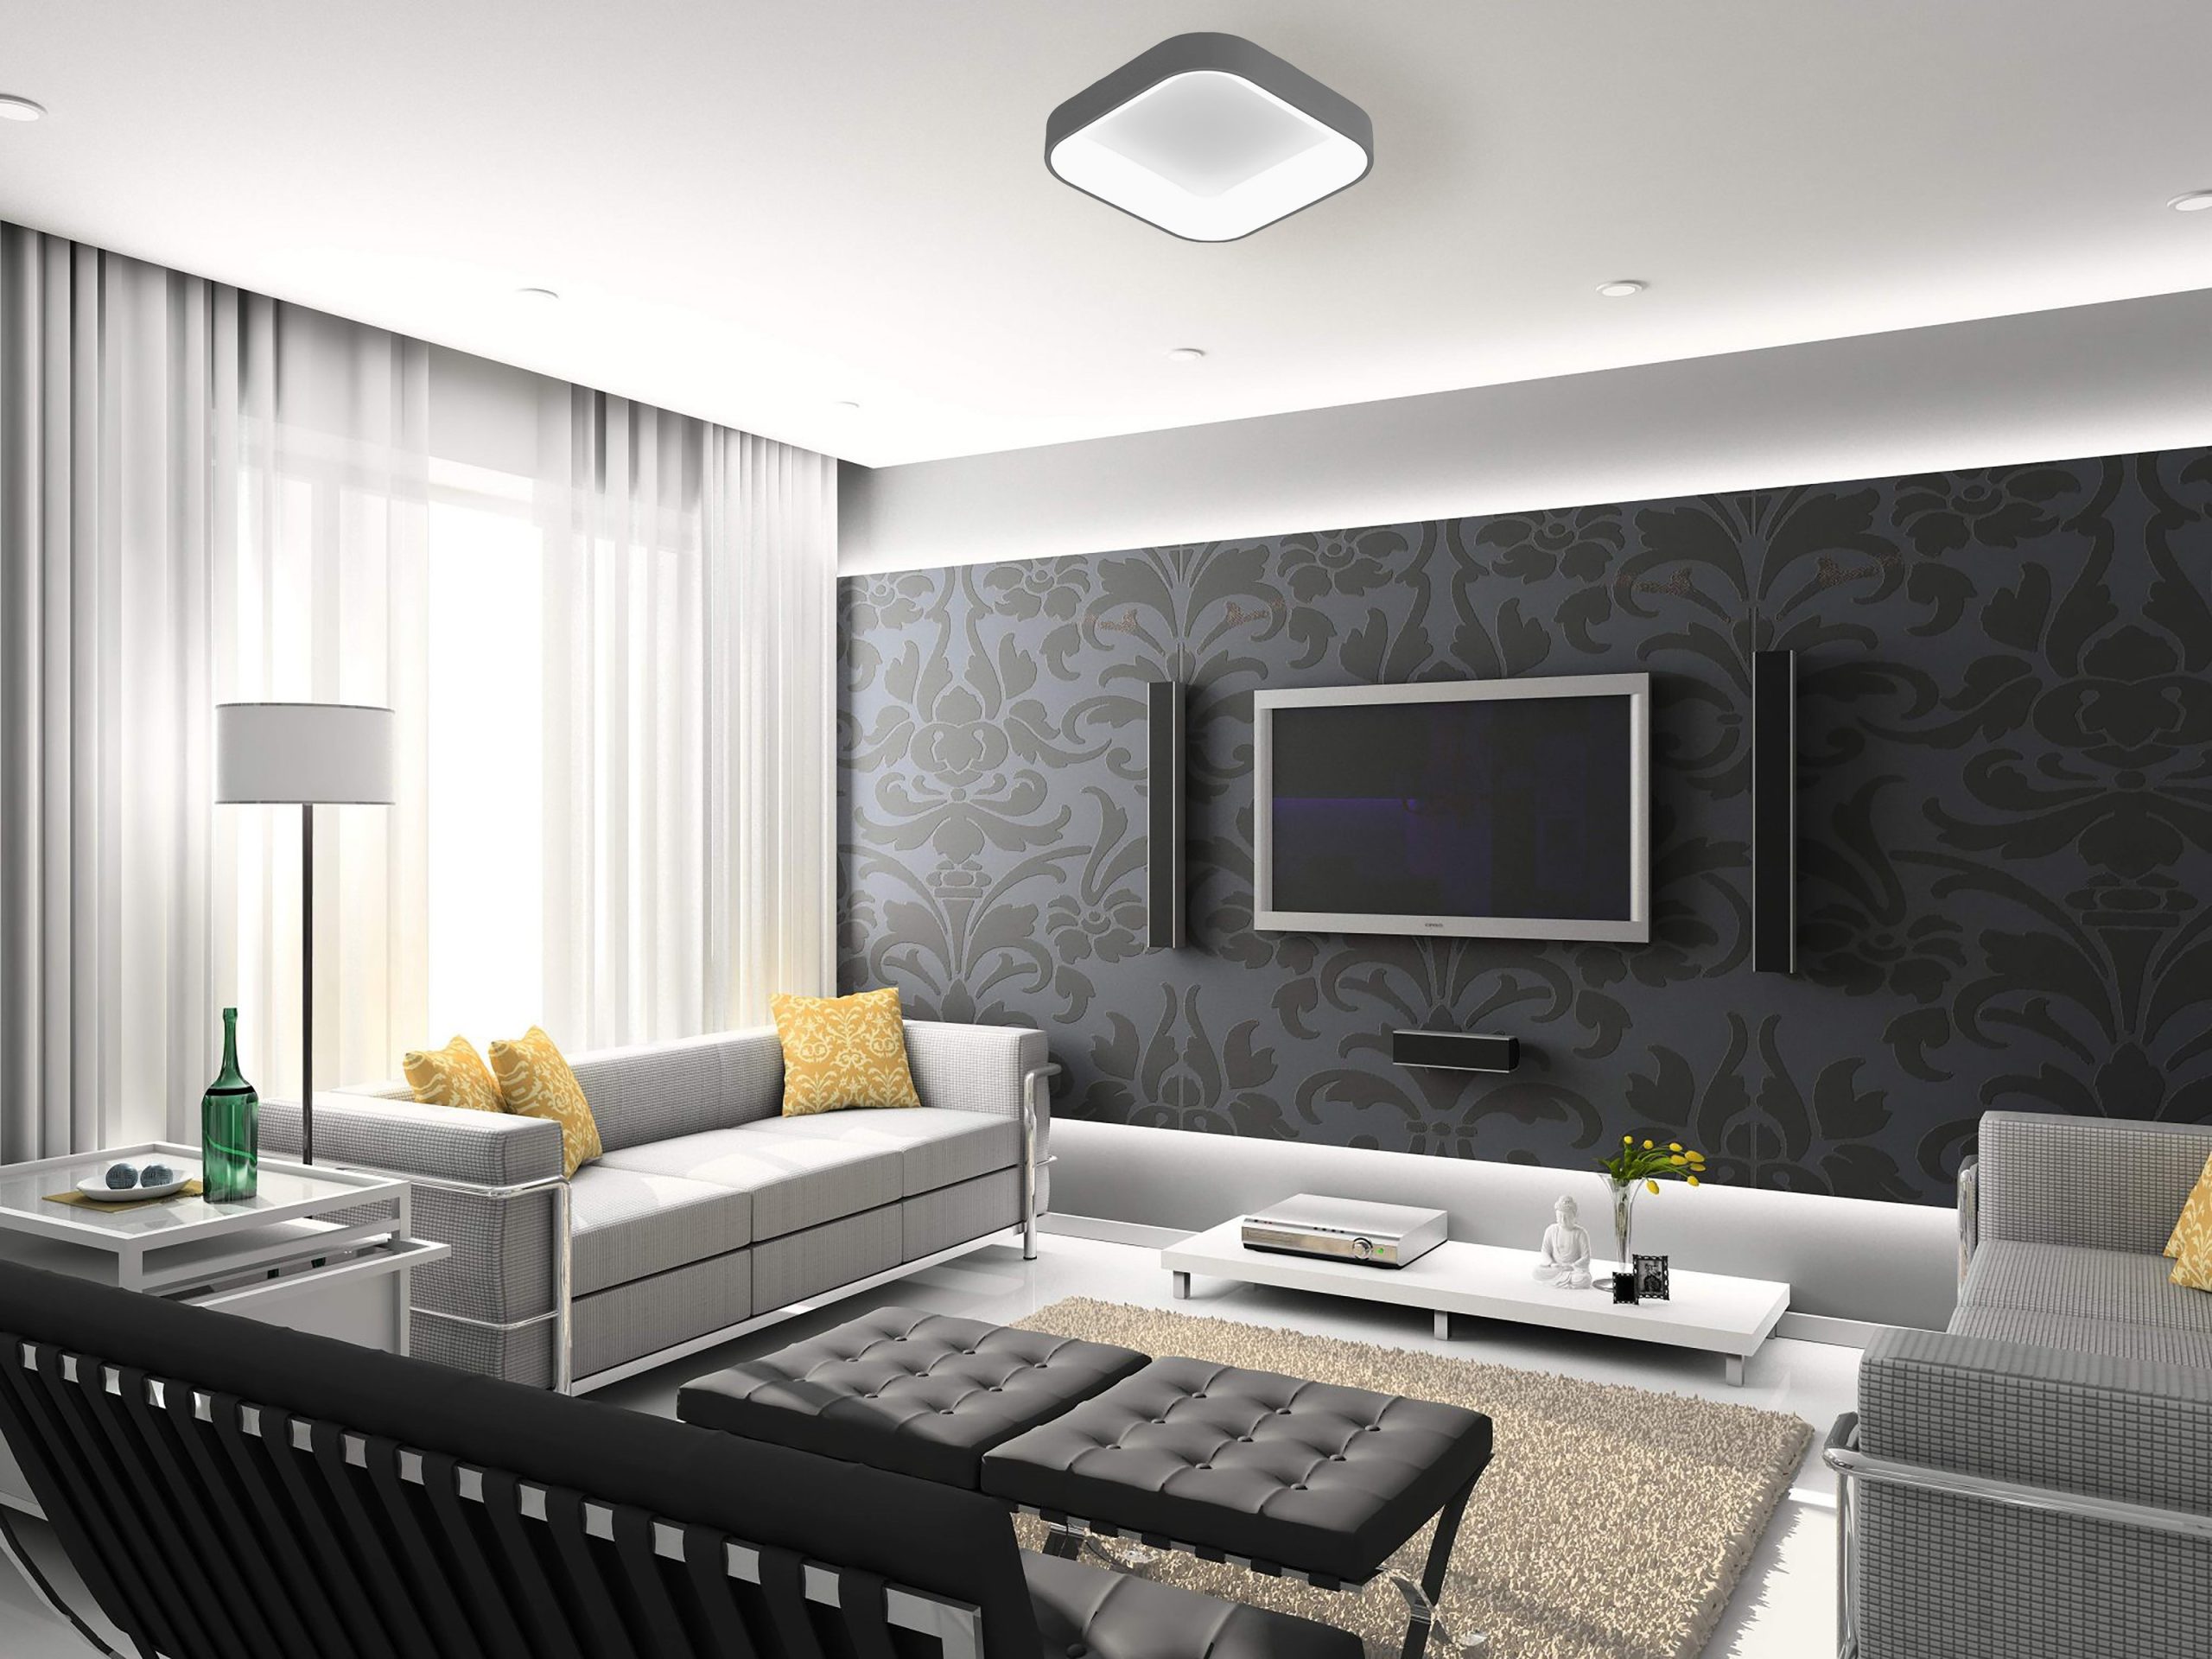 LED Φωτιστικό οροφής πλαφονιέρα LAS PALMAS 50W Γκρι με εναλλαγή χρωμάτων και dimmable  6006GR